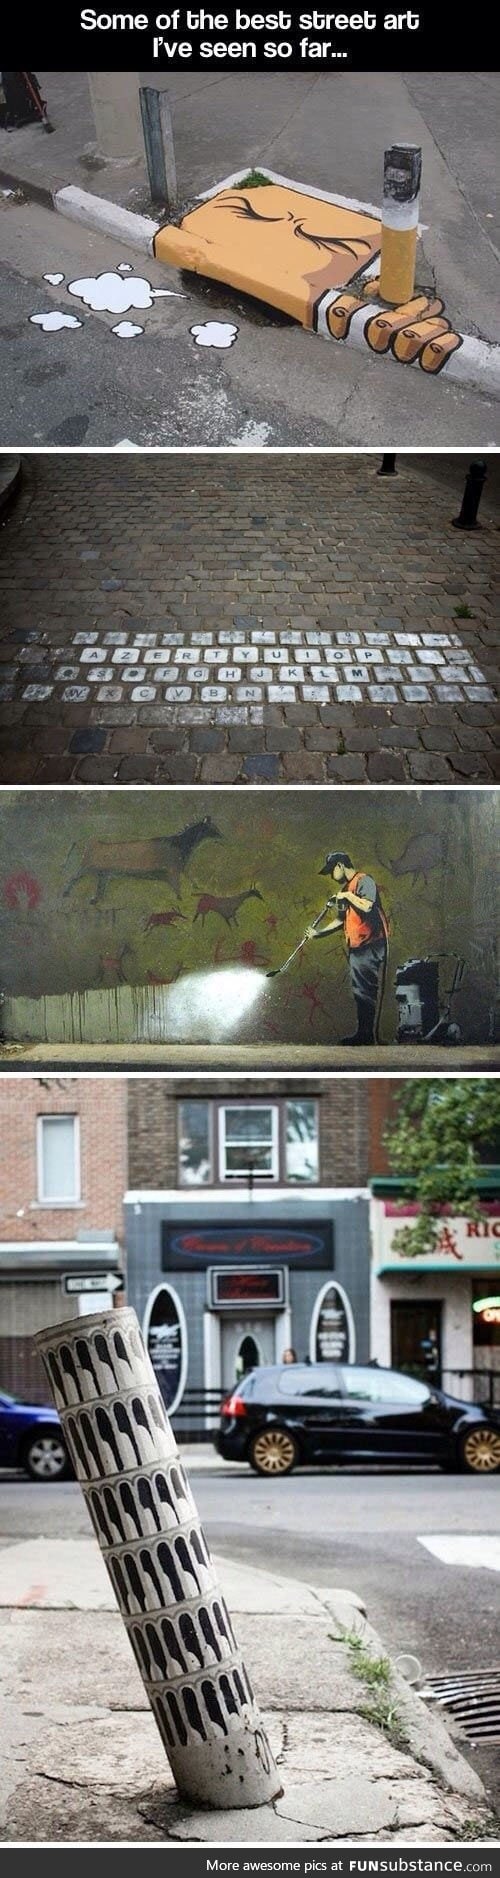 Urban street art that makes sense